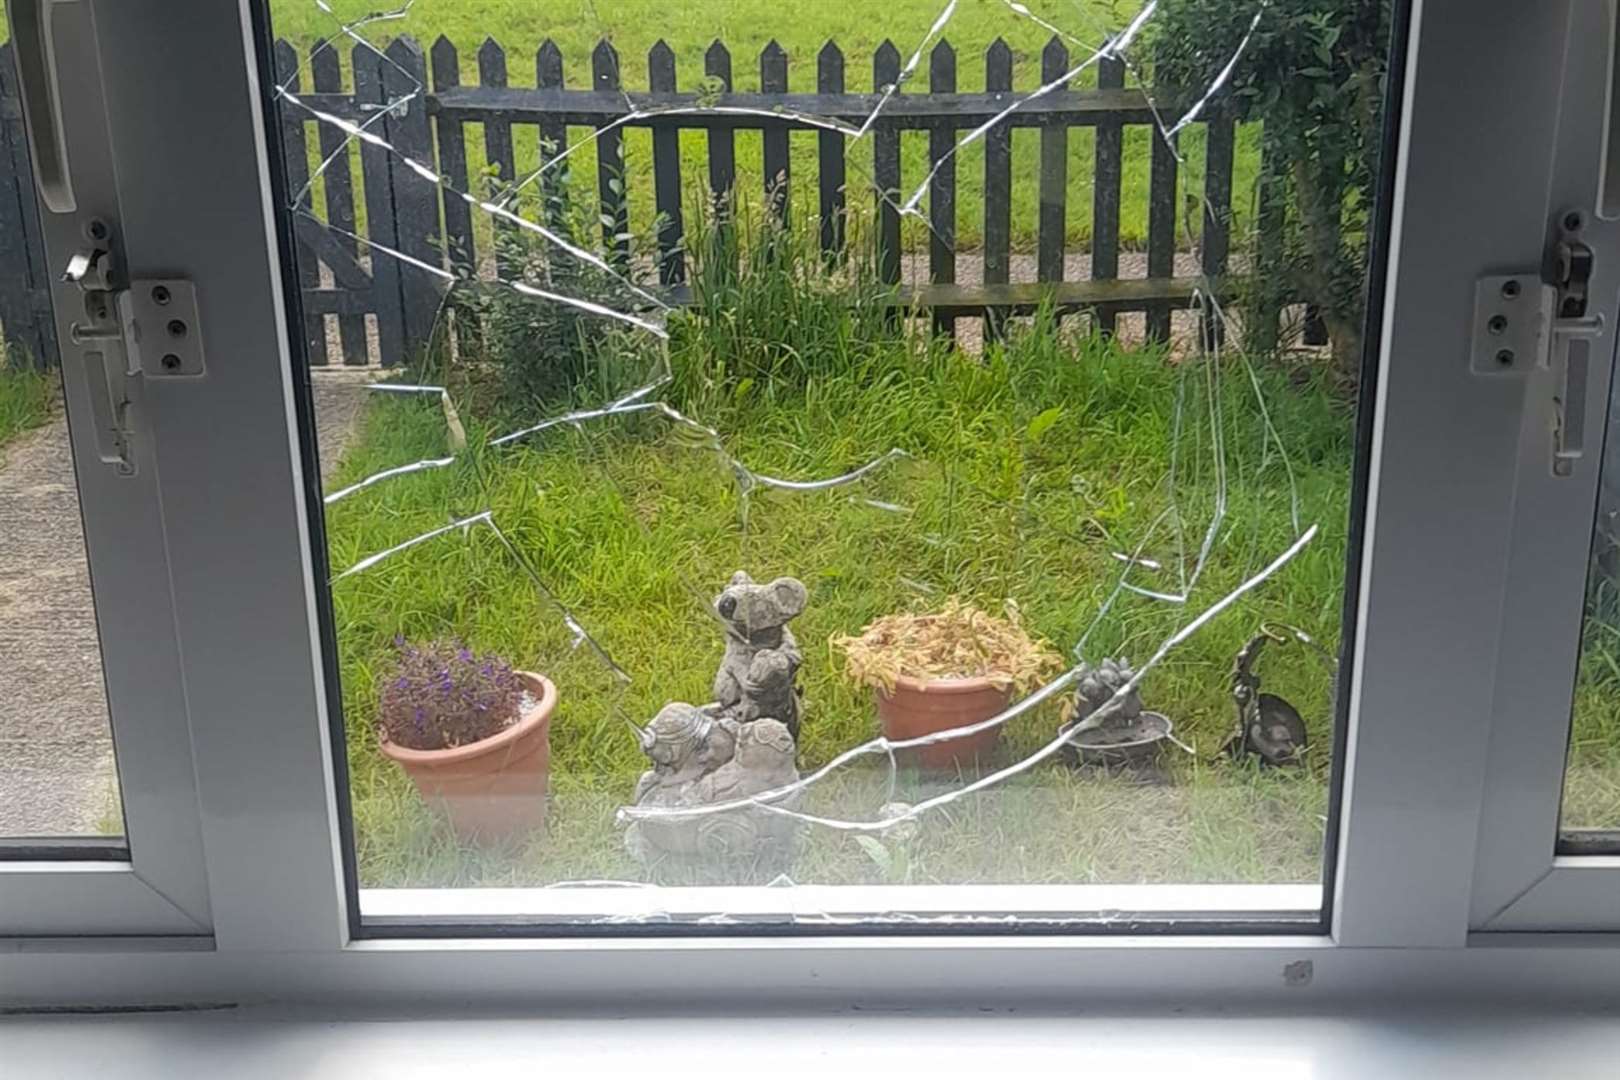 Vandals have hit windows in five Ashford homes. Photo: Rebecca Horton